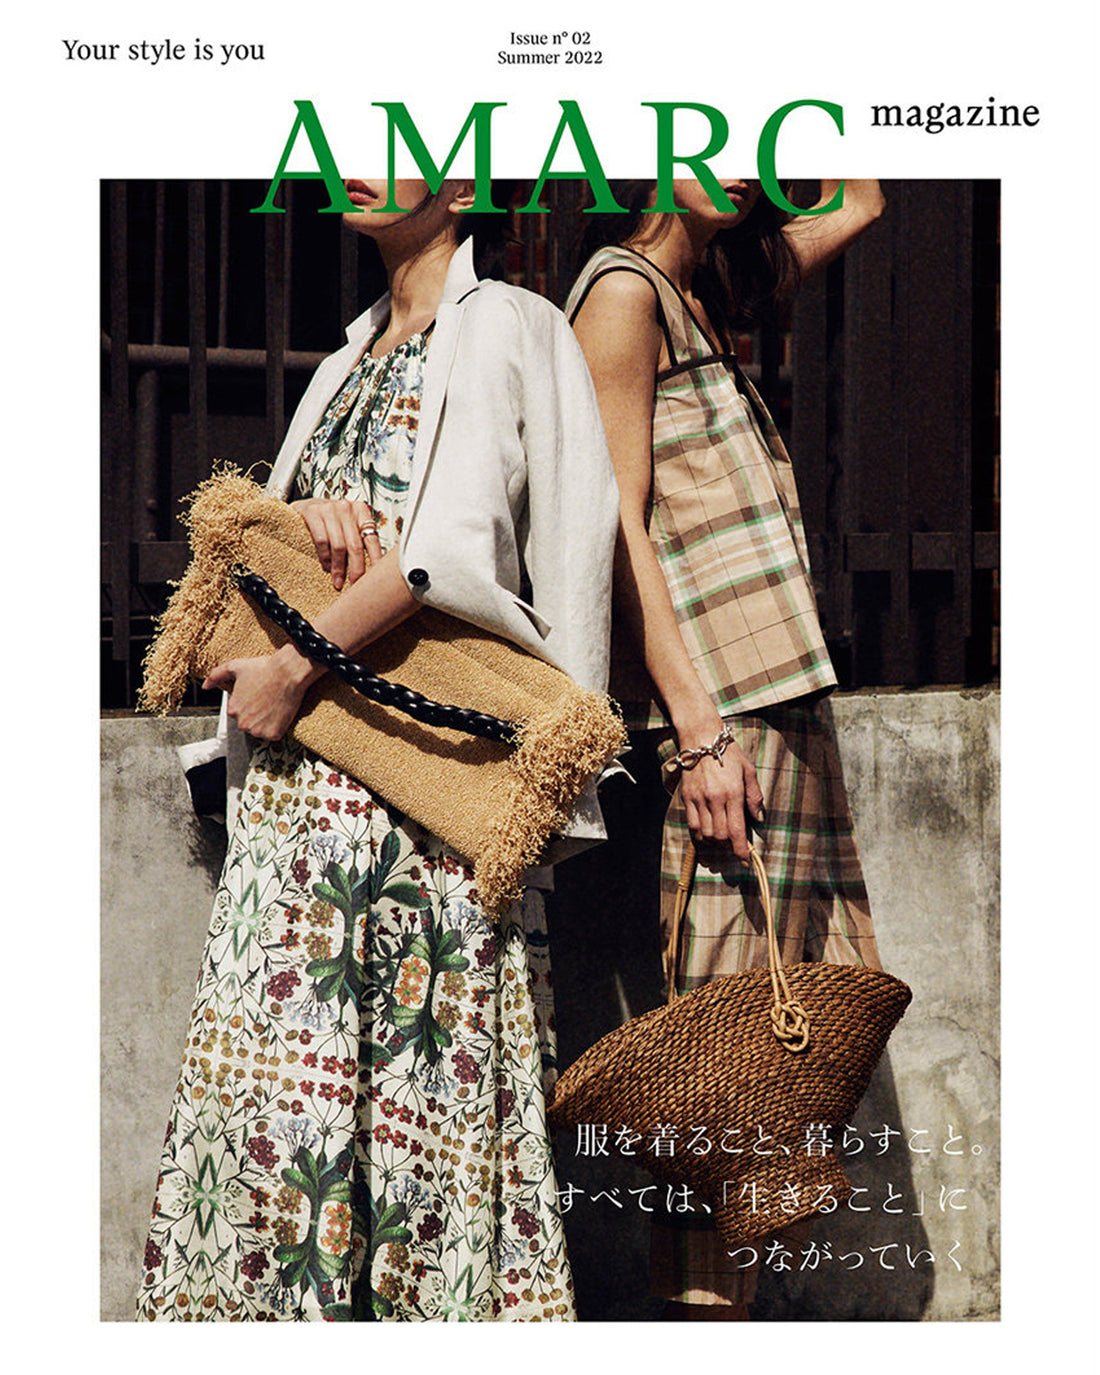 AMARC magazine issue.02